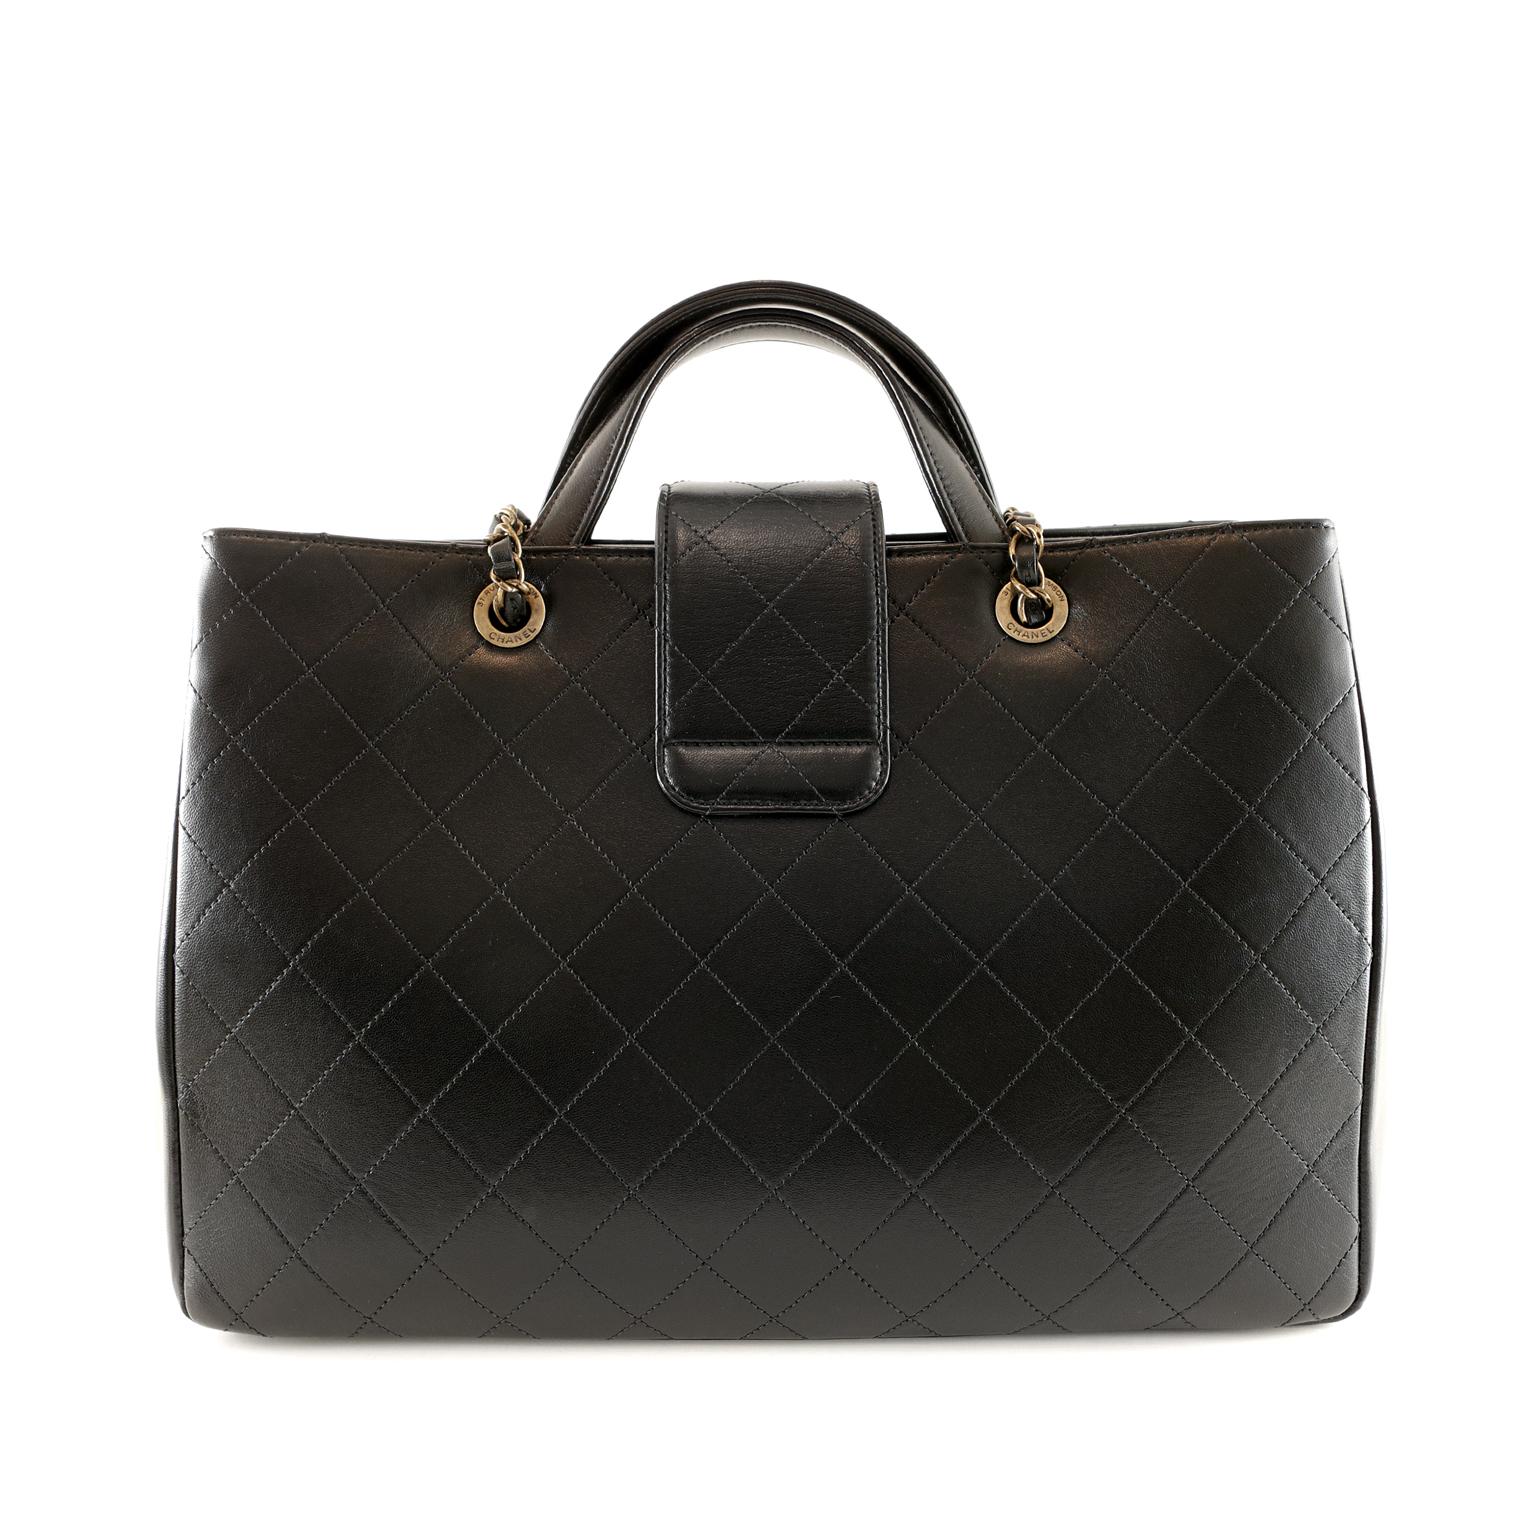 Women's Chanel Black Leather Executive Shopper